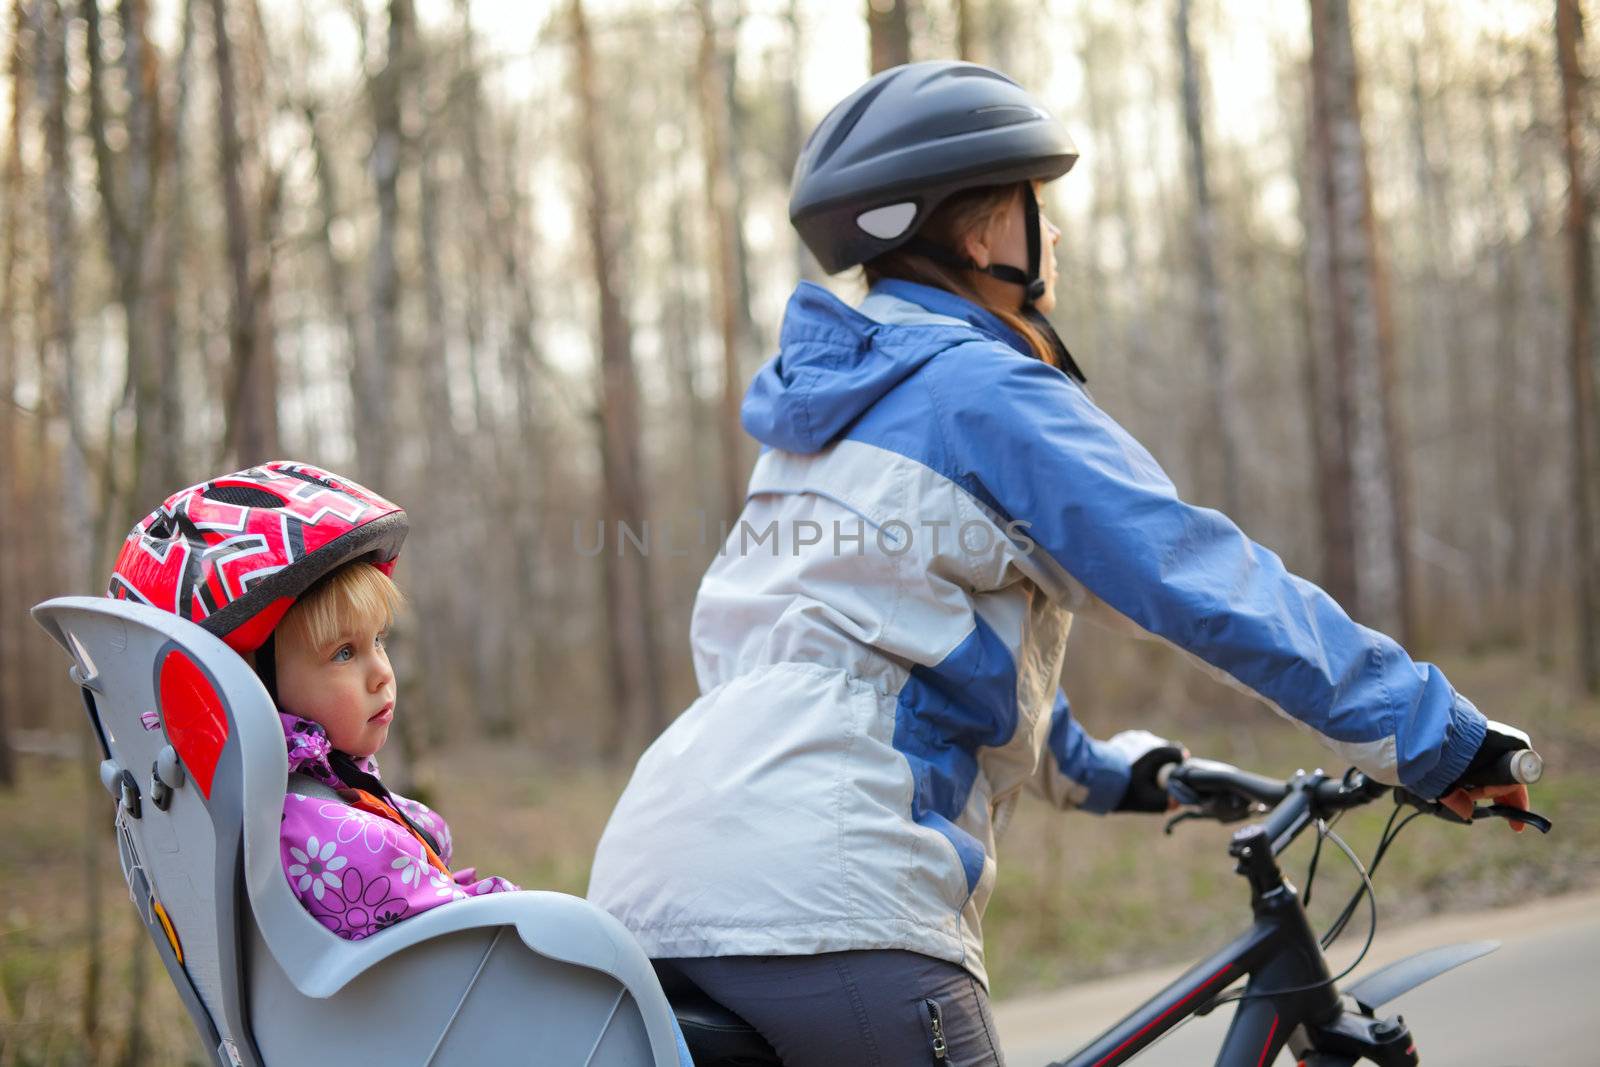 Child in bike seat by naumoid